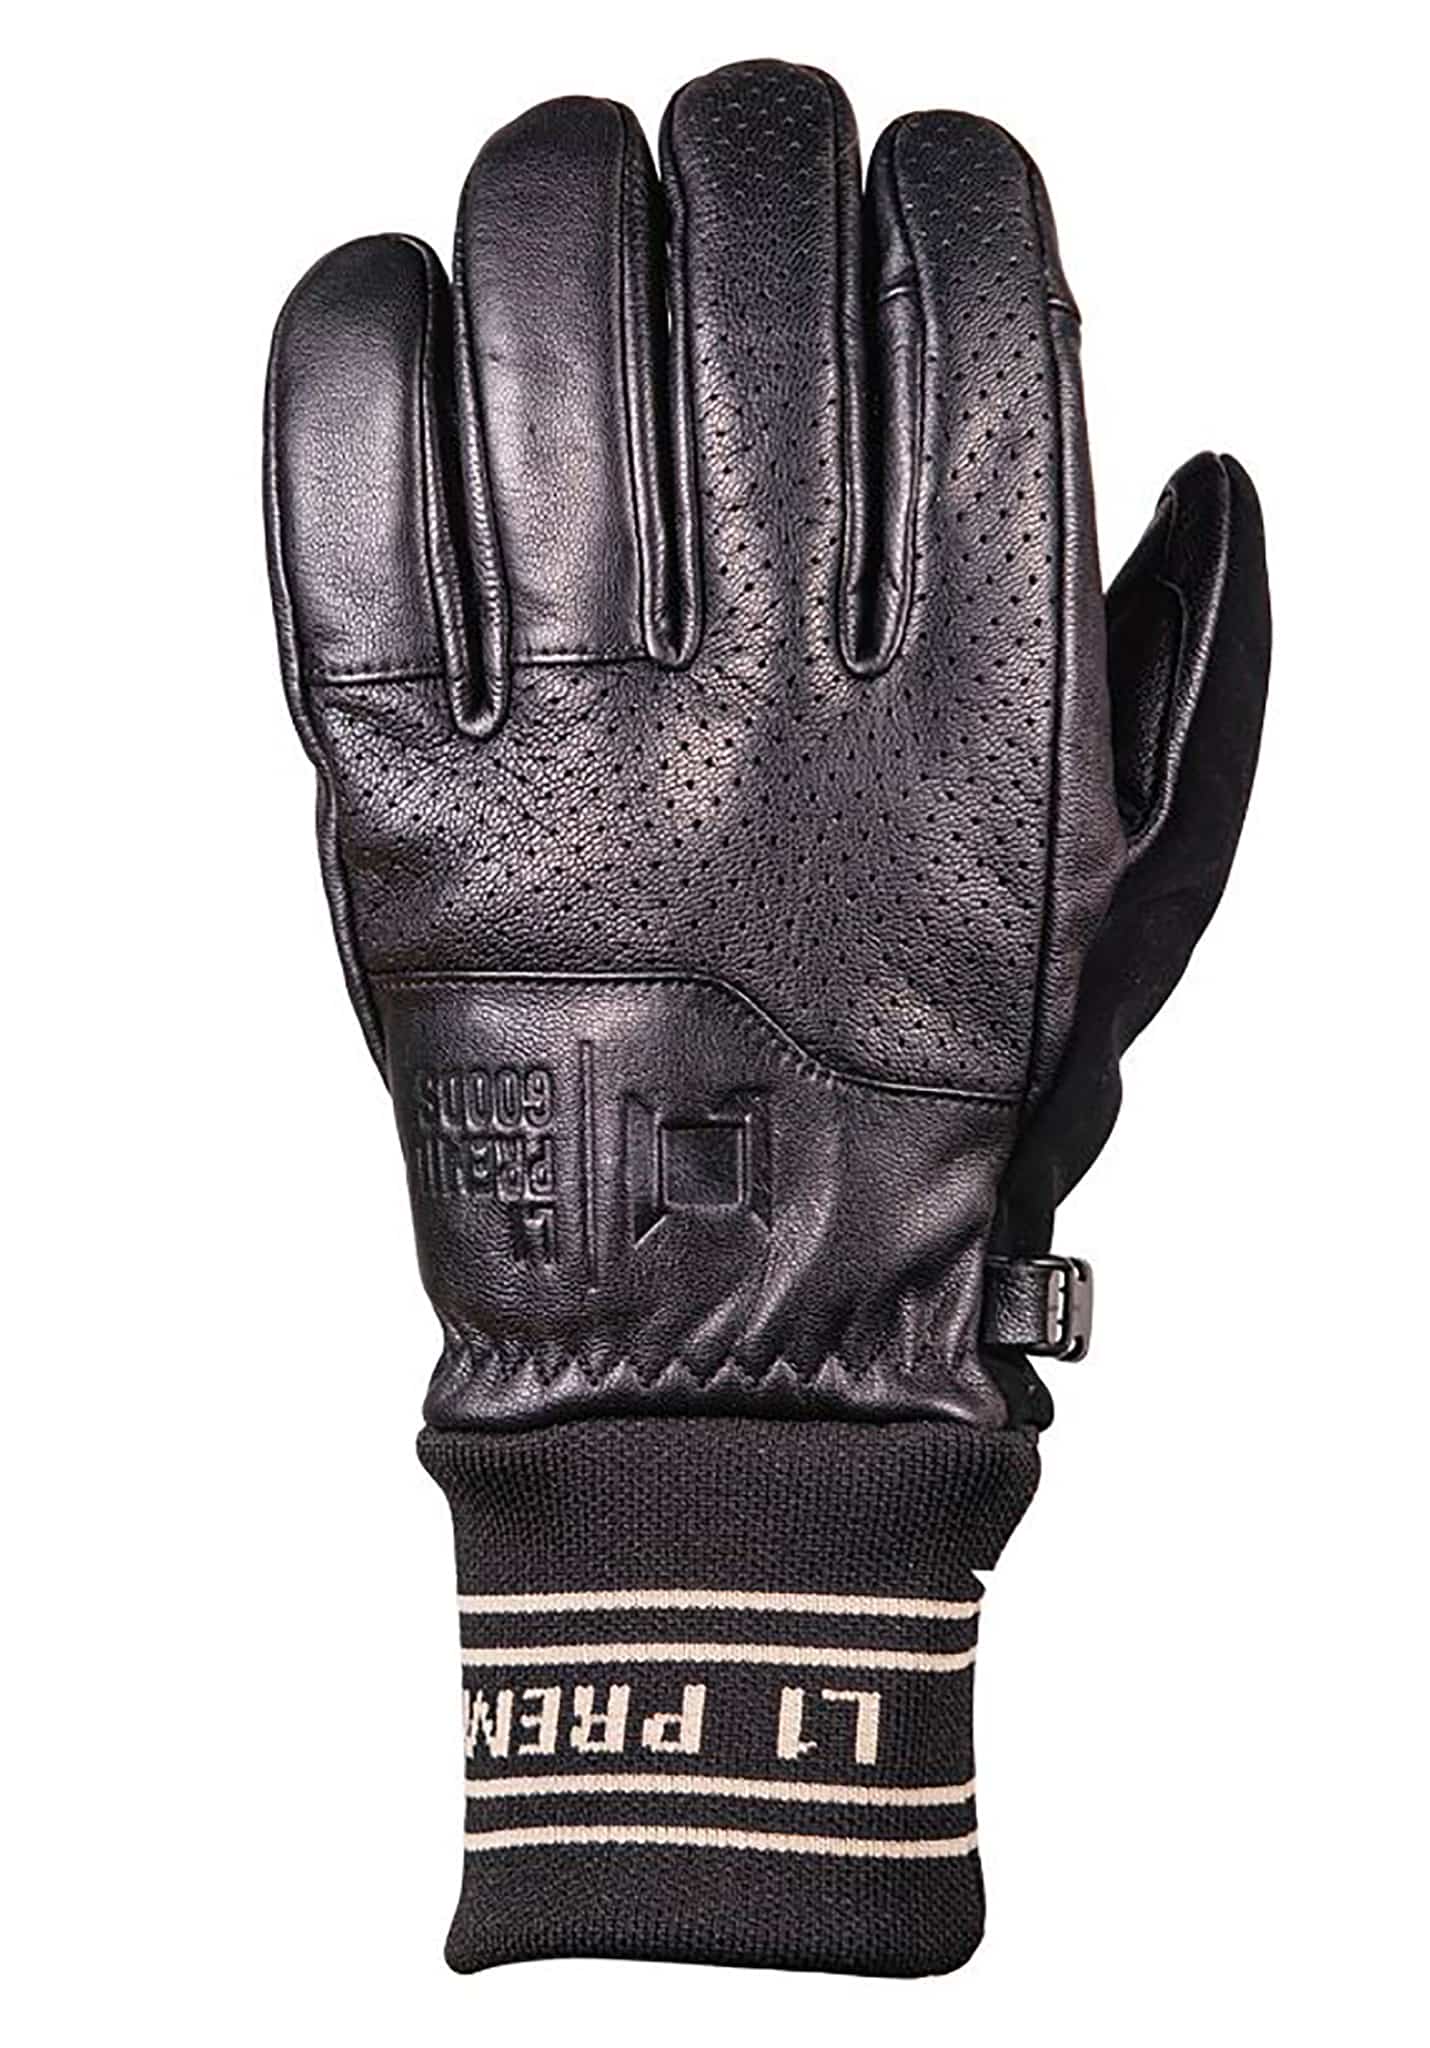 L1 Sabbra Handschuhe black S